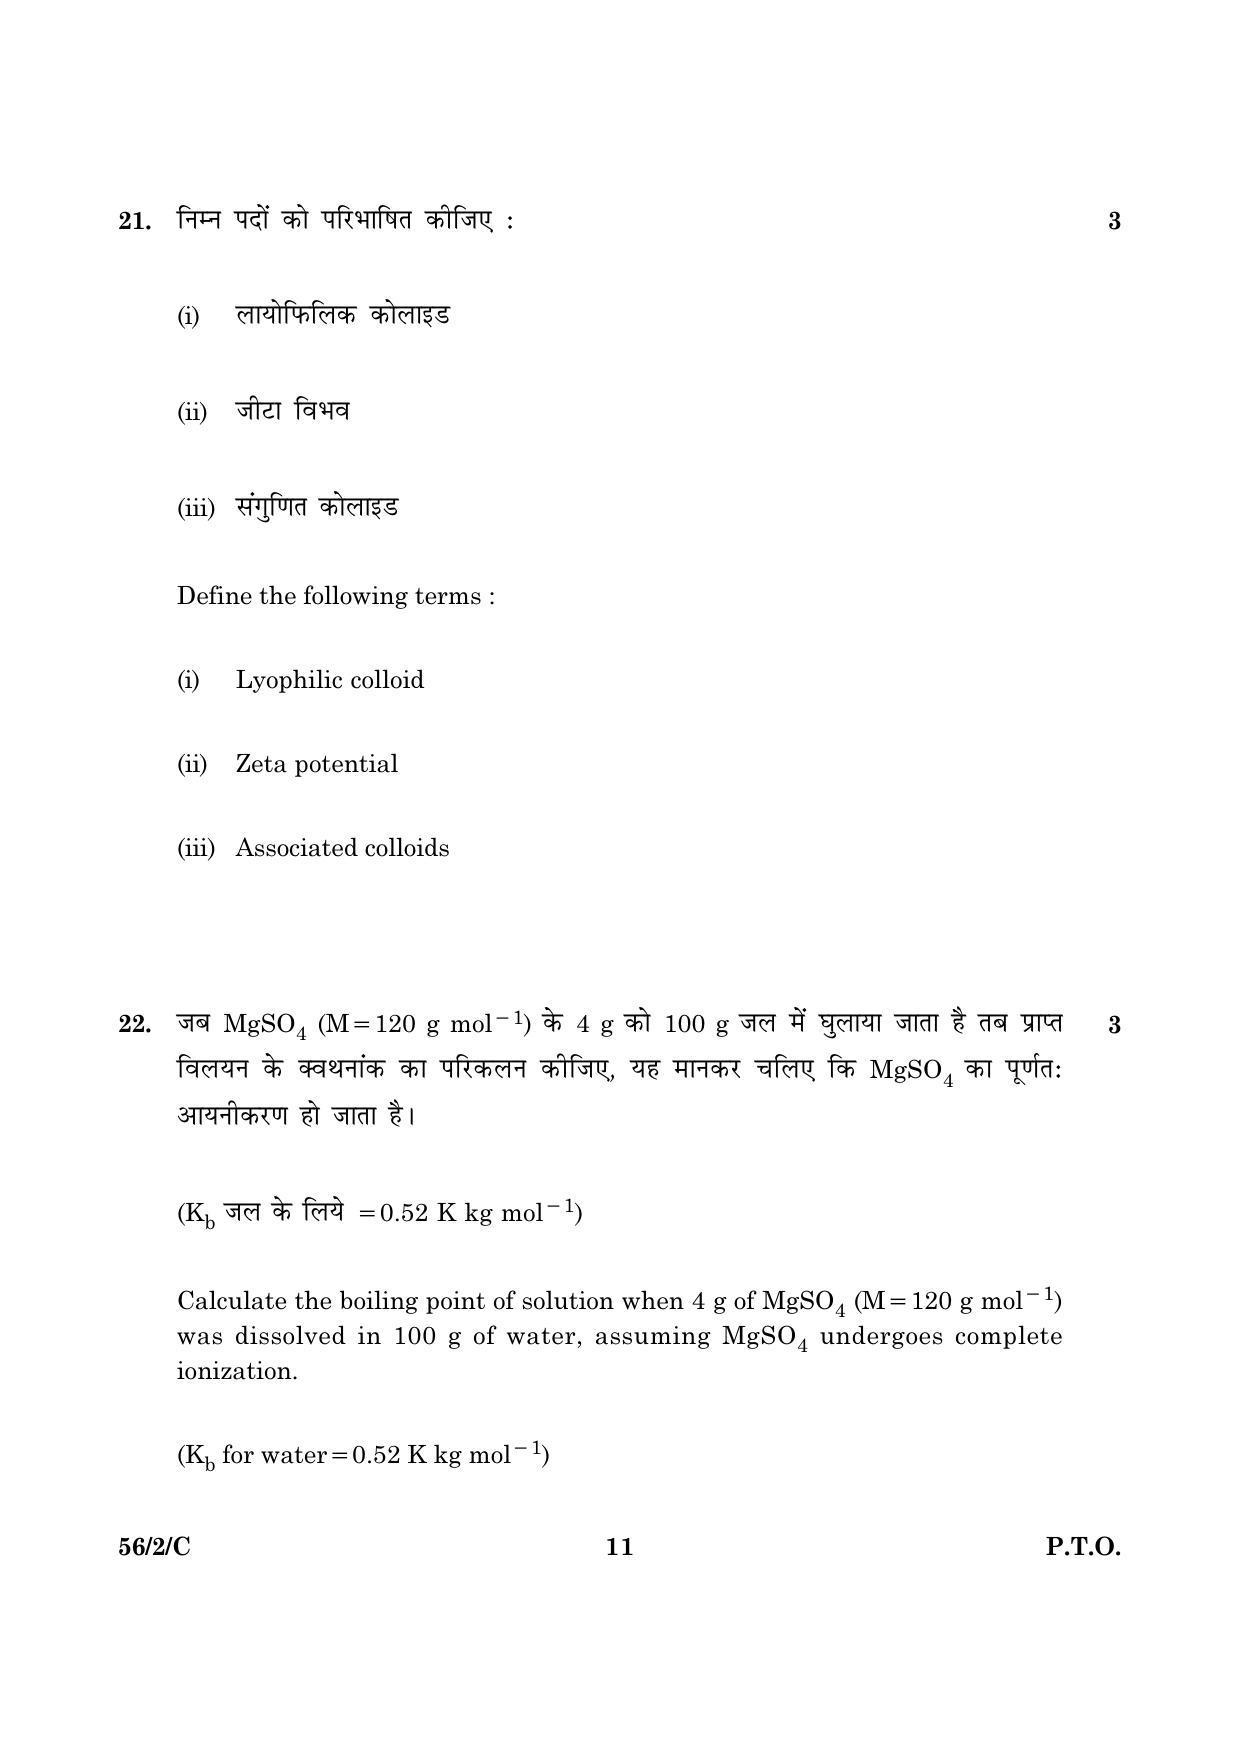 CBSE Class 12 056 Set 2 C Chemistry 2016 Question Paper - Page 11